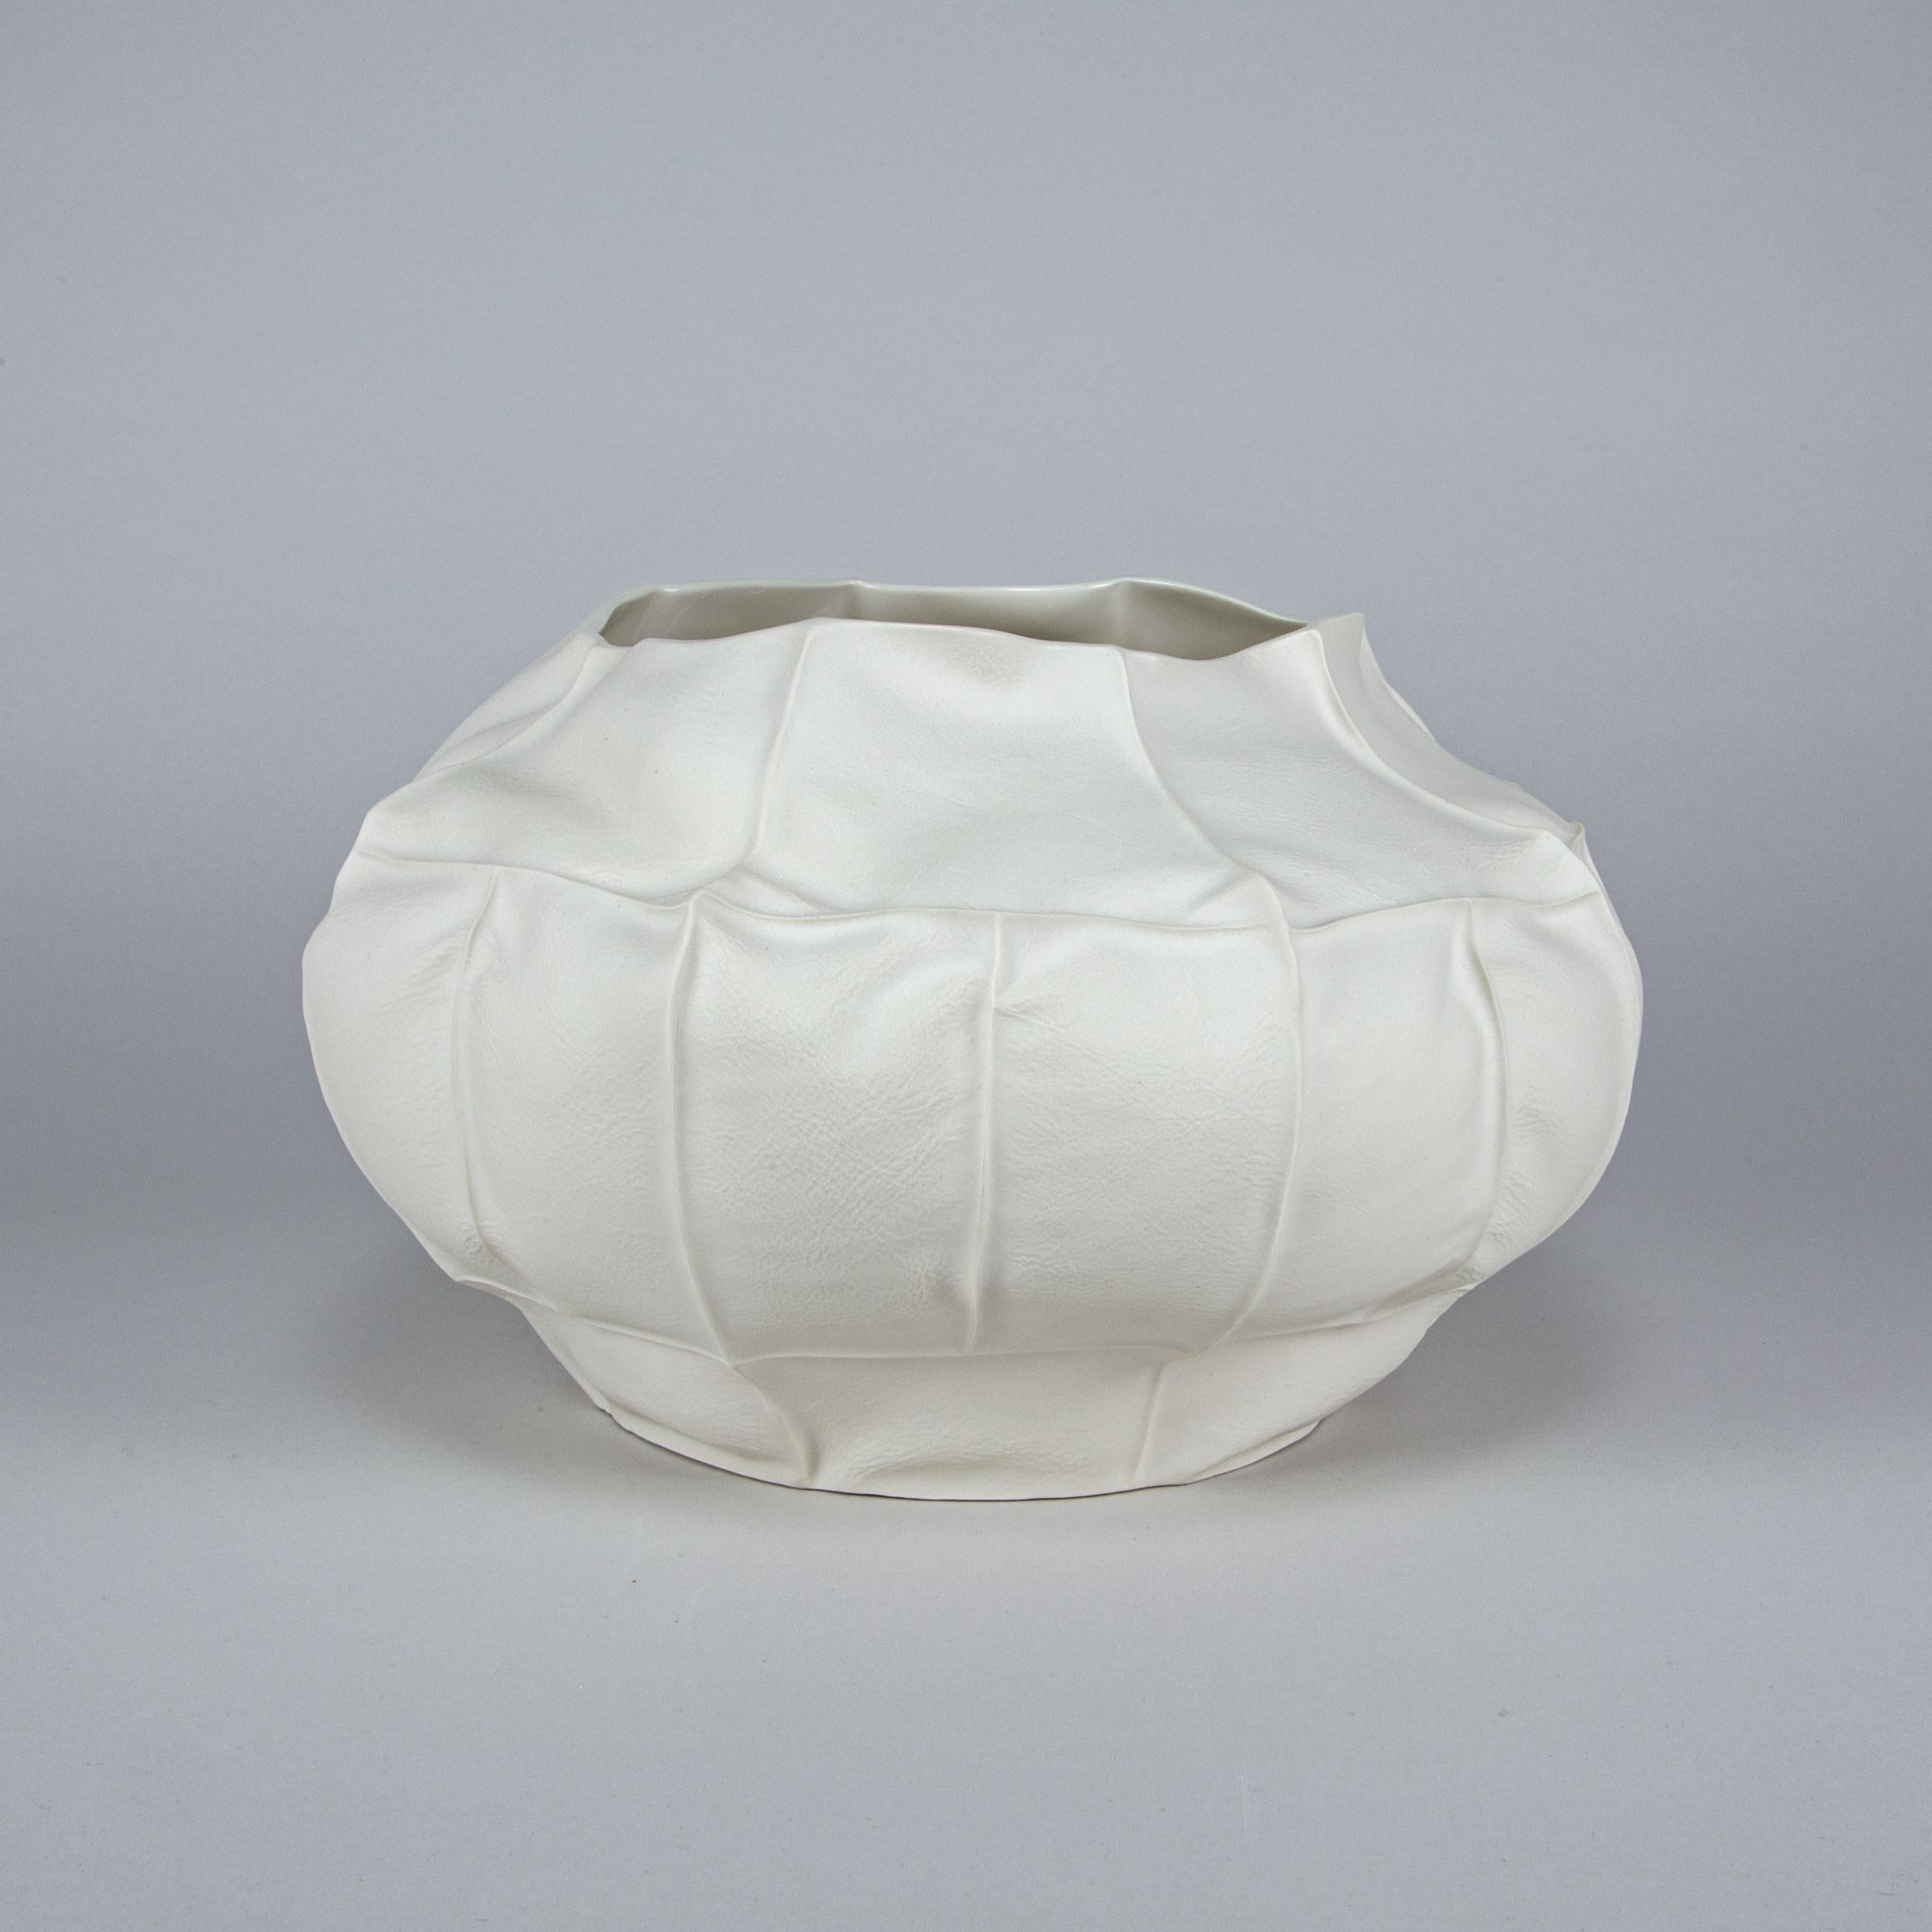 Contemporary Organic White Ceramic Kawa Vessel, Large 01, Leather Cast Porcelain Vase For Sale